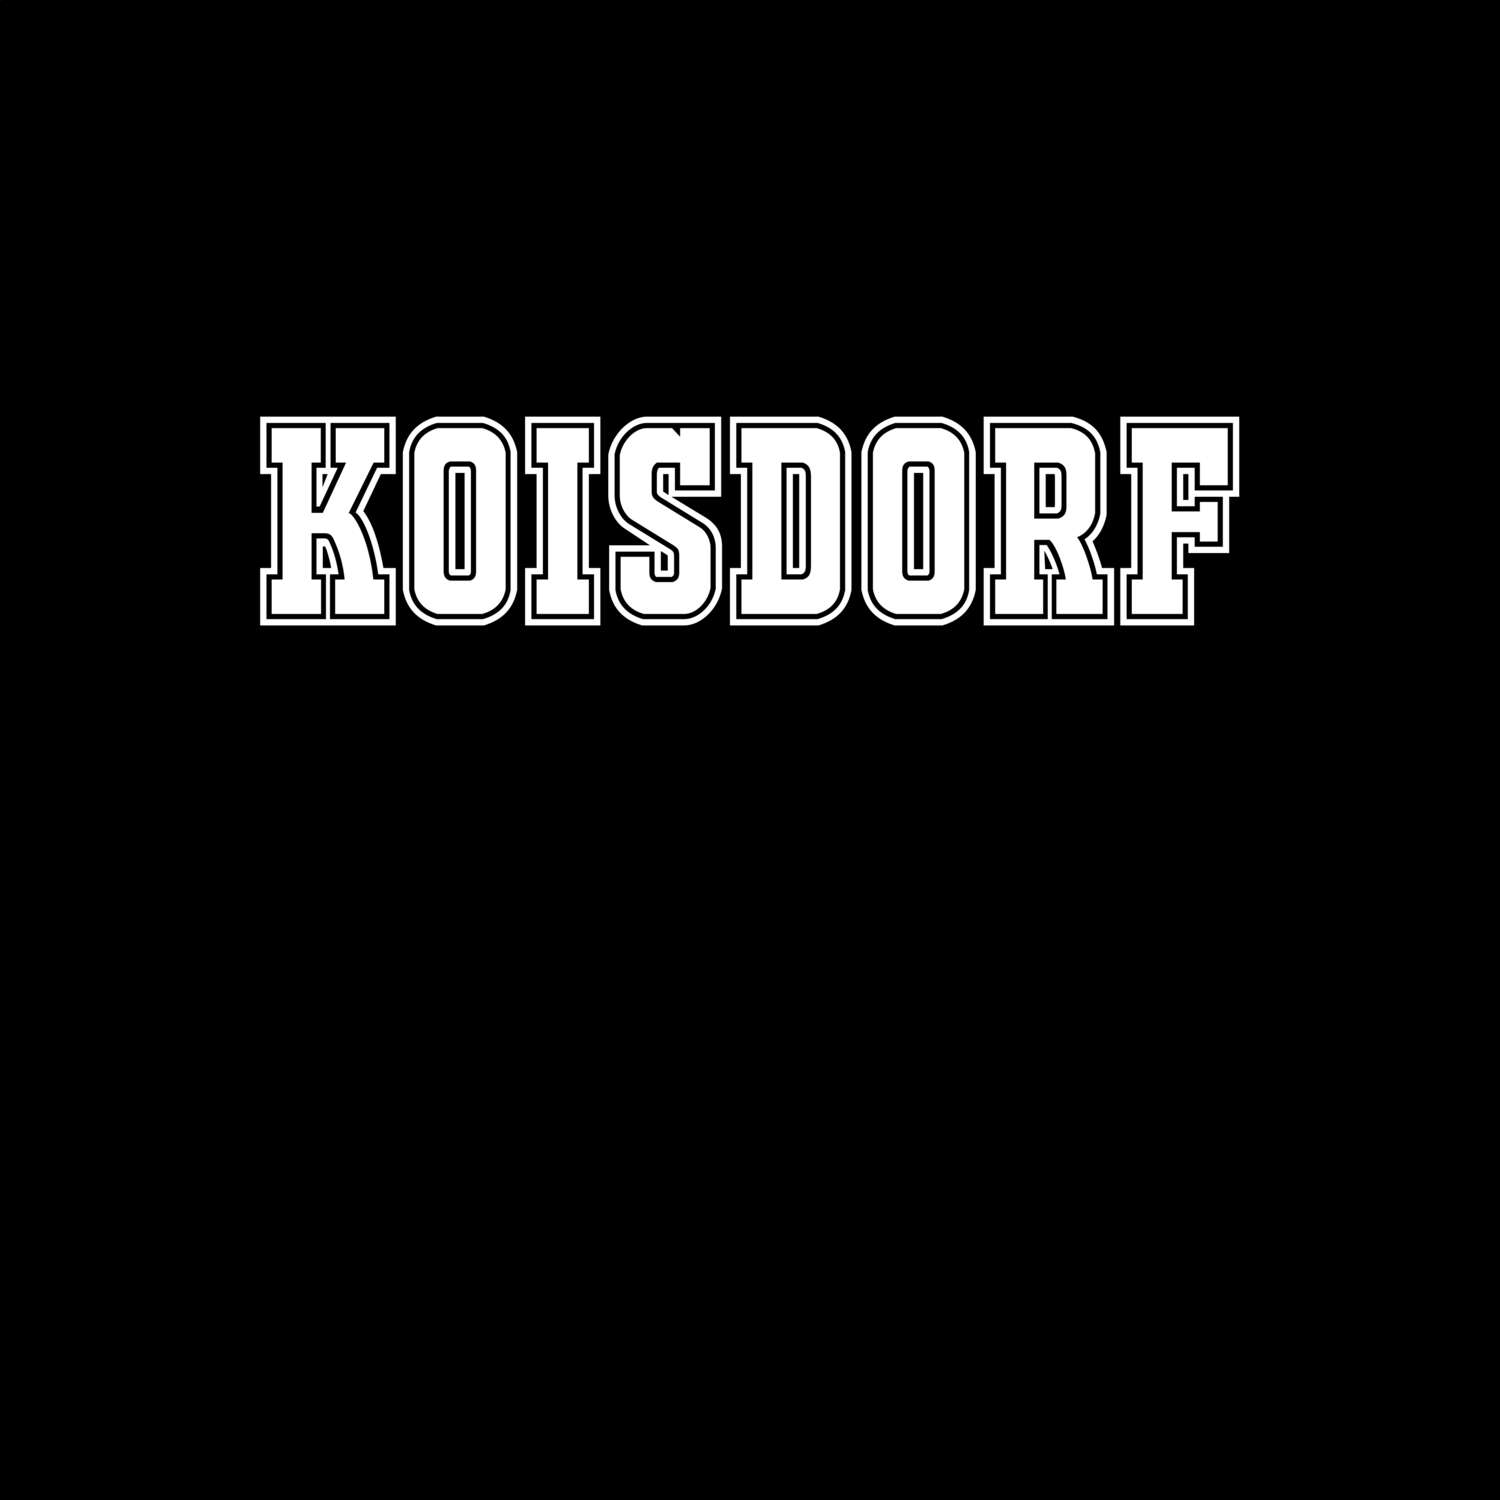 Koisdorf T-Shirt »Classic«